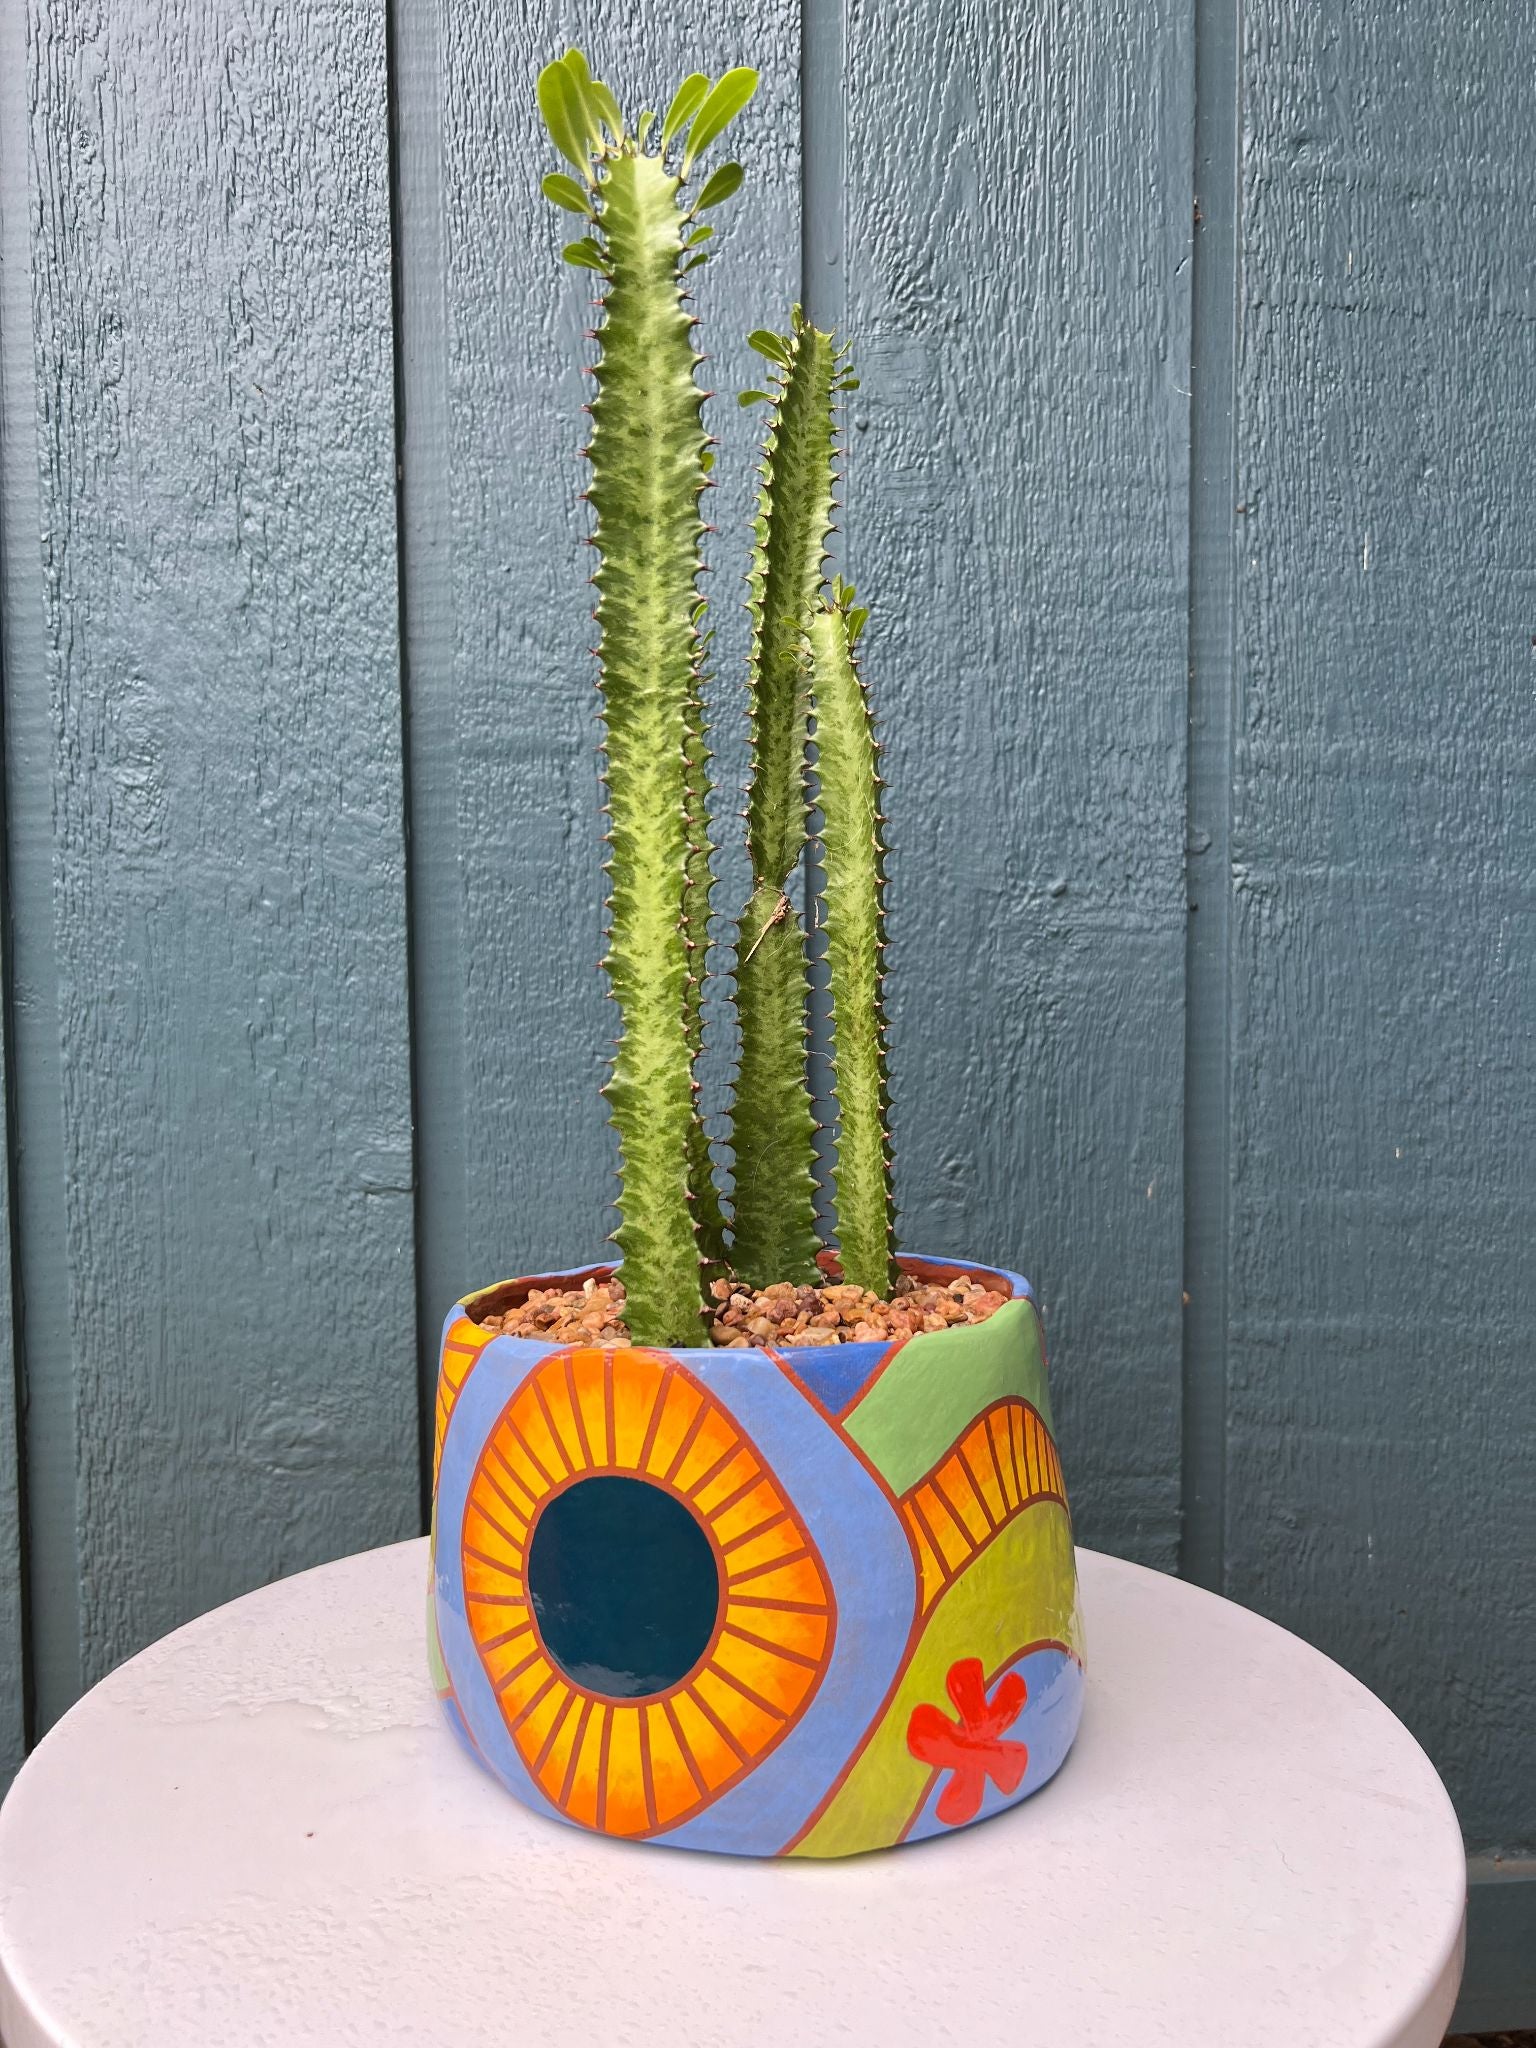 Cactus- Large ceramic planter with rainbow waves, sunshine and flowers.   - 2